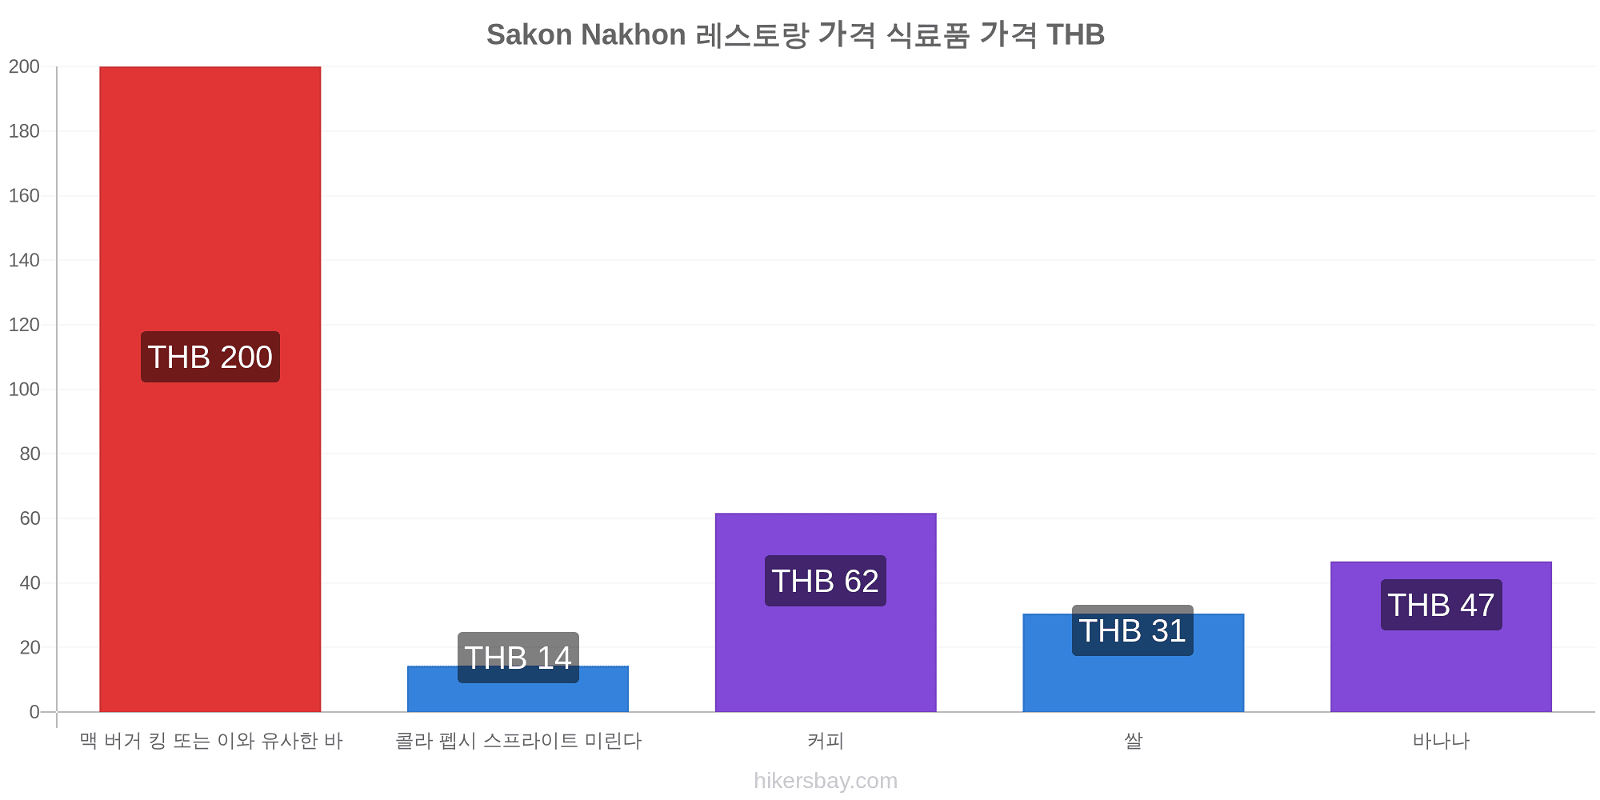 Sakon Nakhon 가격 변동 hikersbay.com